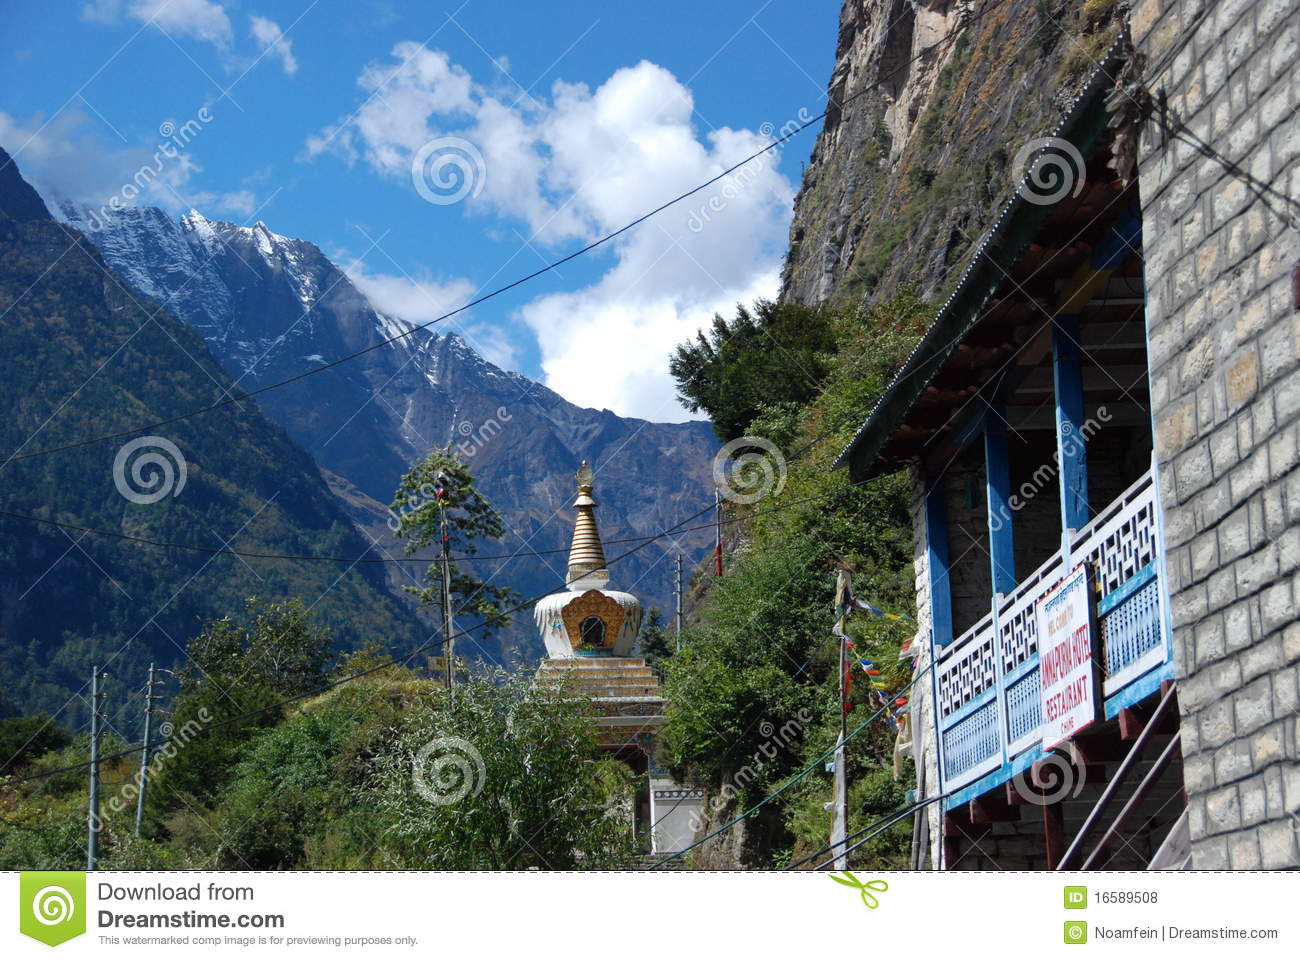 11 Nepali Mountain Stock Photography Images